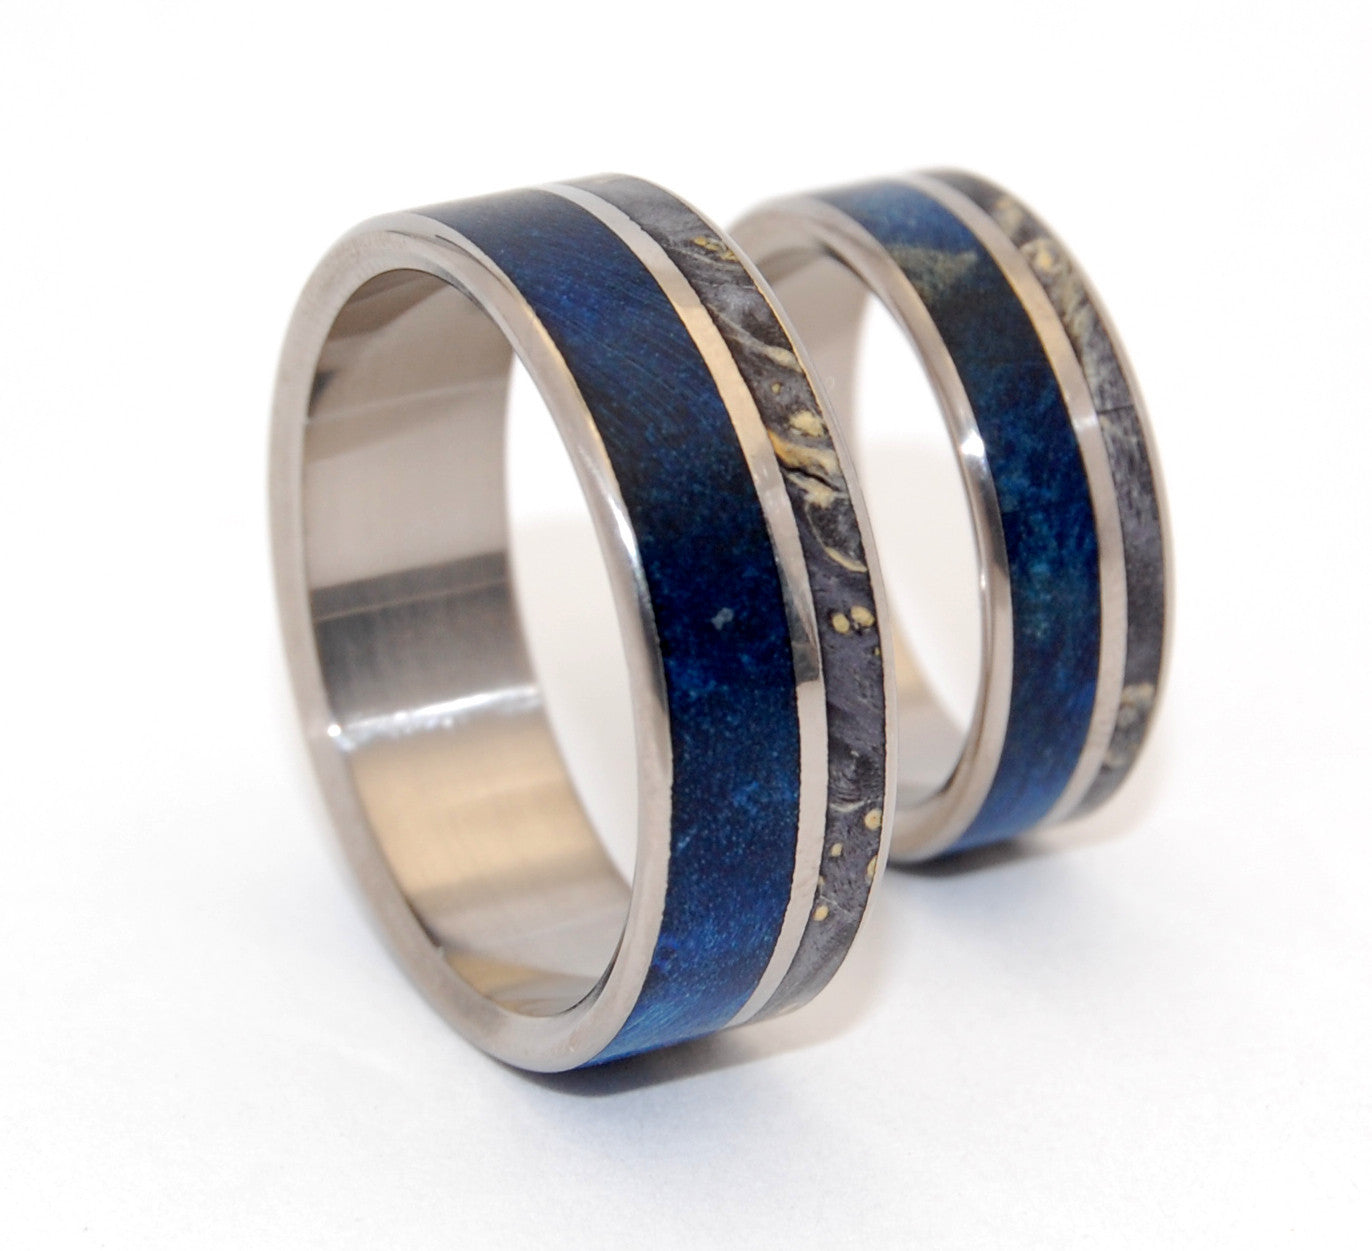 SWOON | Box Elder Wood & Titanium - Unique Wedding Rings Set - Minter and Richter Designs